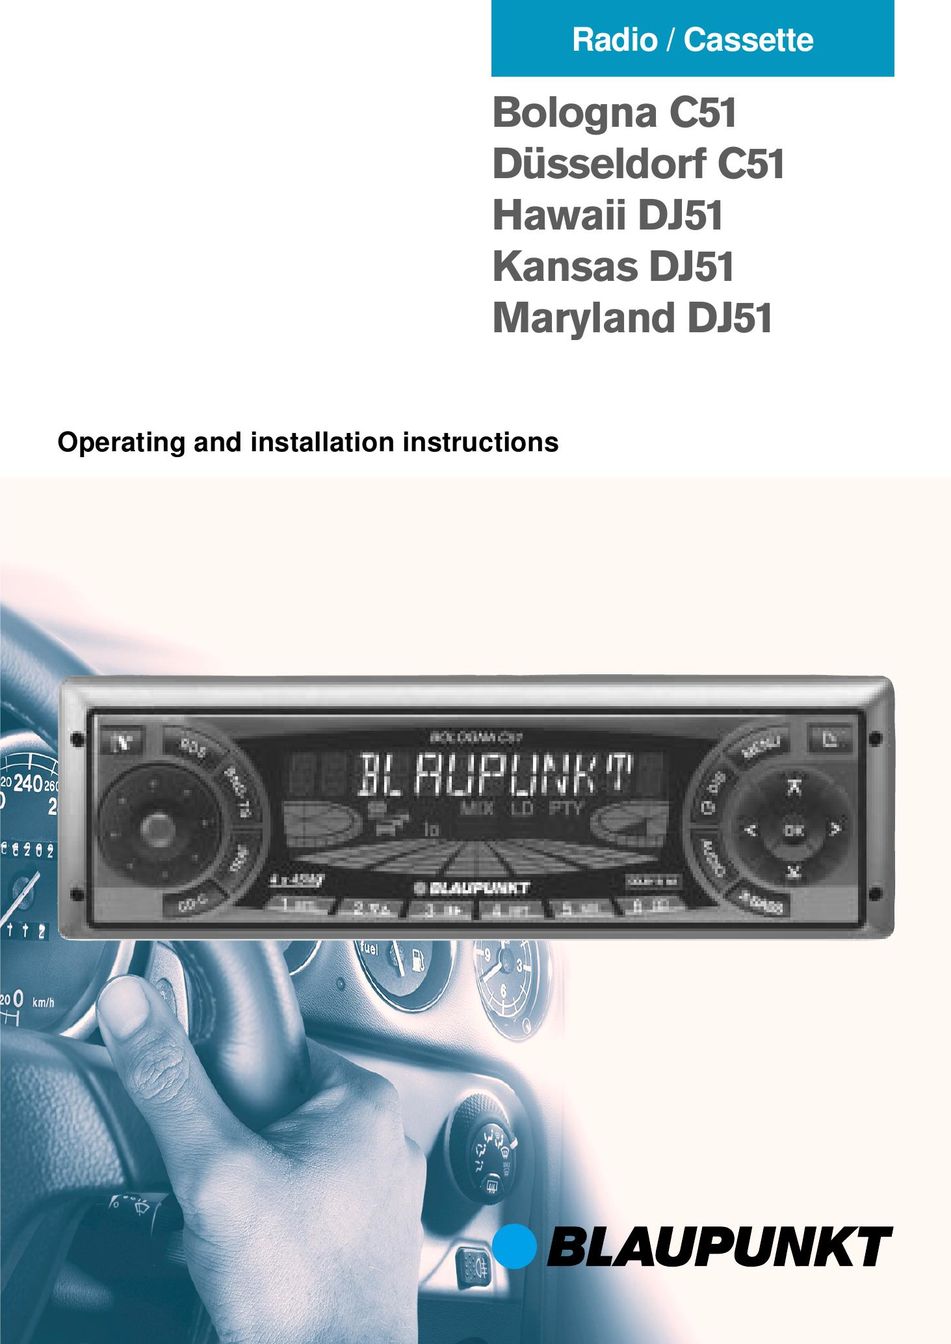 Blaupunkt Hawaii DJ51 Portable Radio User Manual